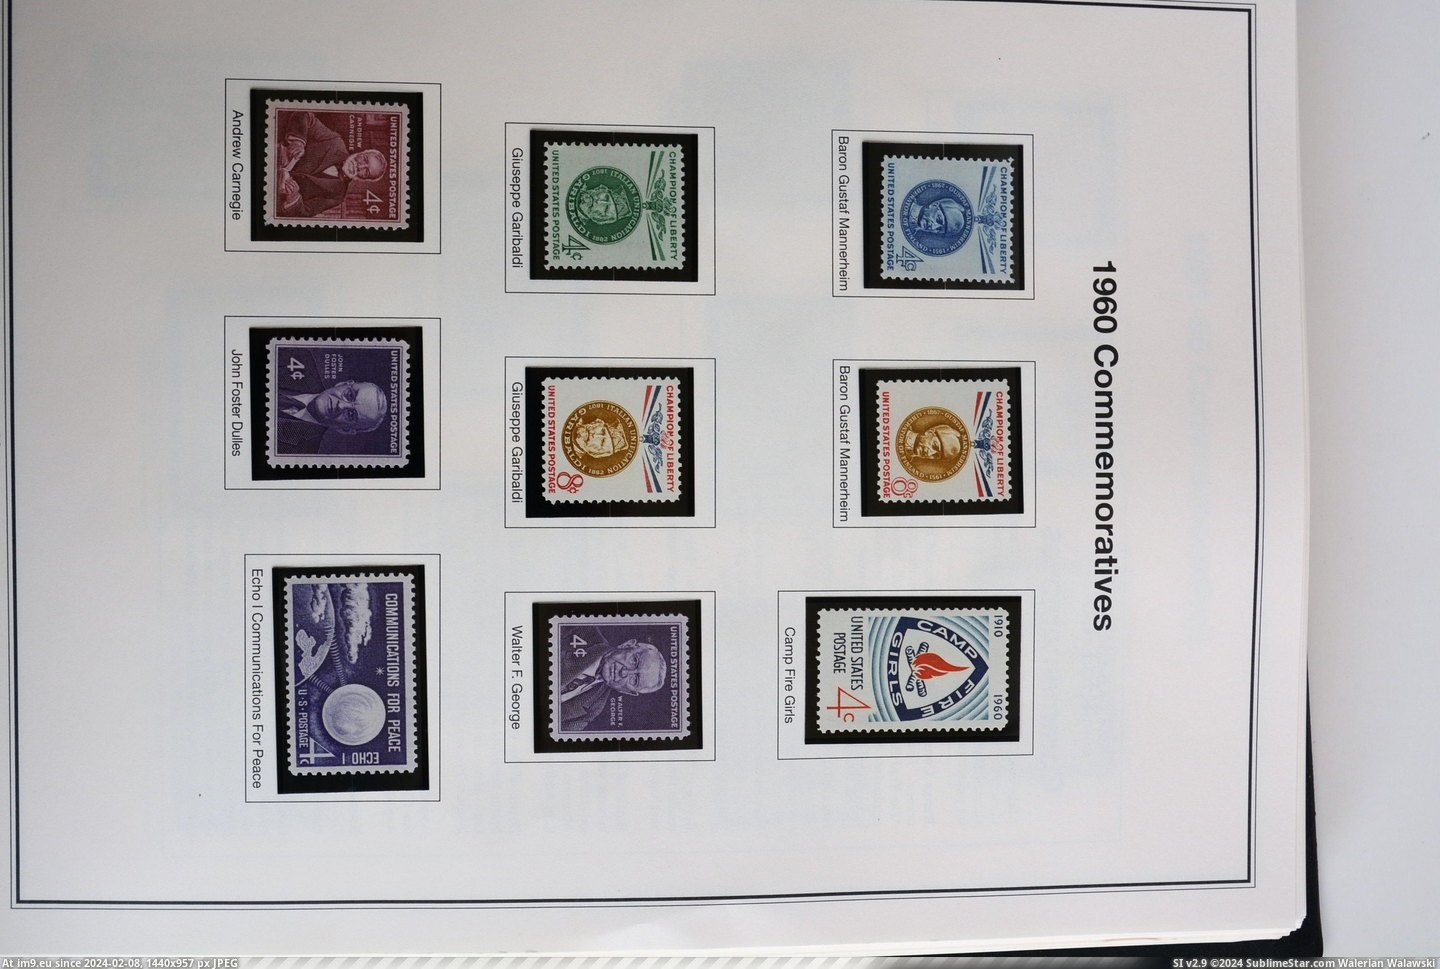  #Dsc  DSC_0848 Pic. (Image of album Stamp Covers))